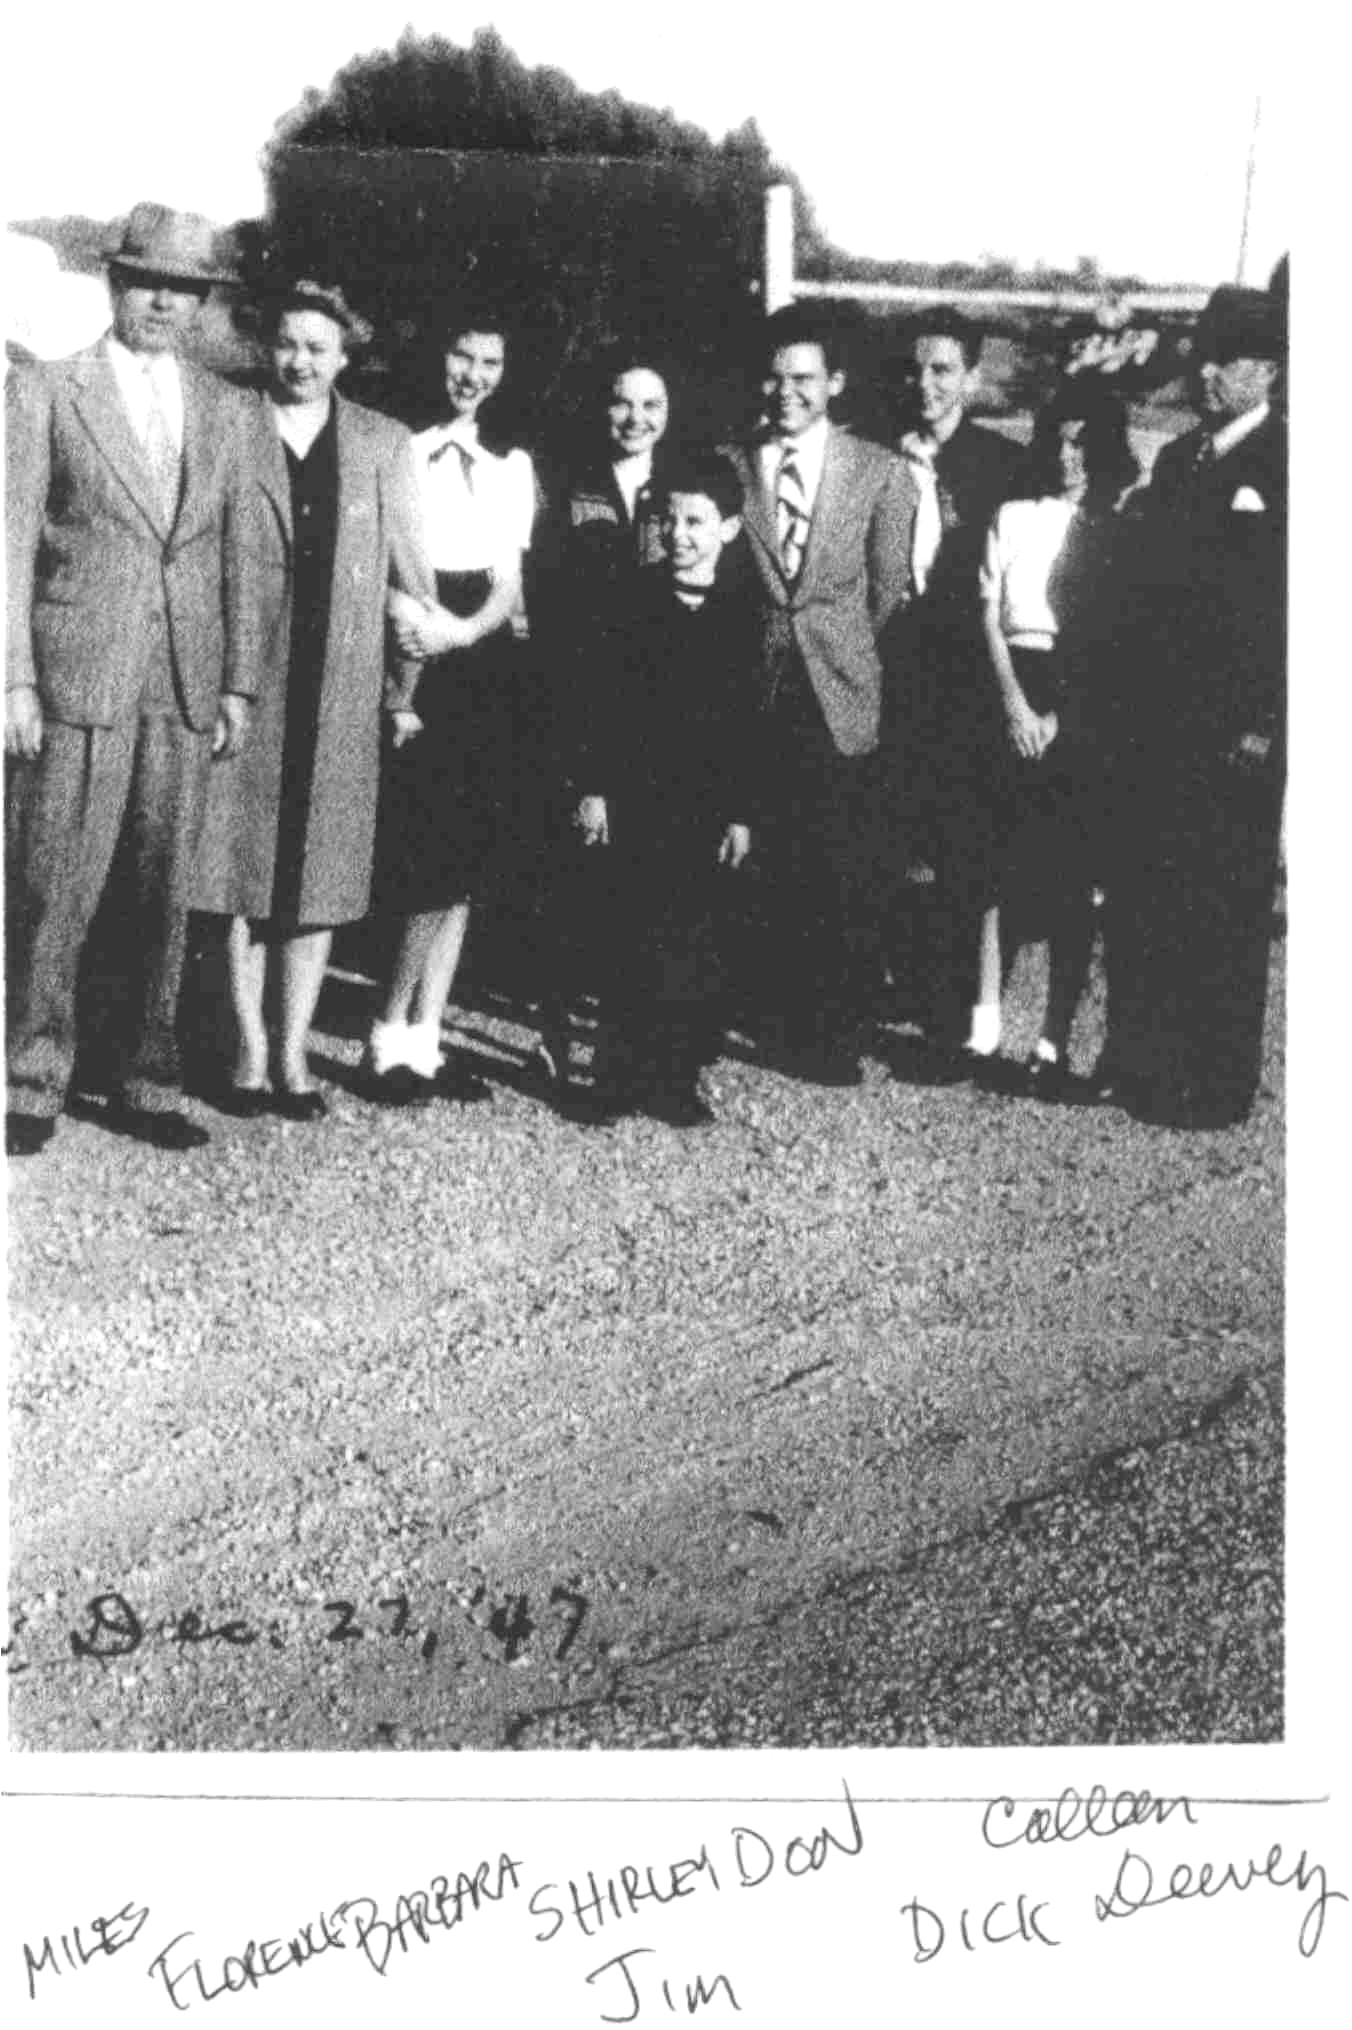 Miles, Florence,Barbara, Shirley, Jim, Don, Dick, Colleen, Dewey-Dec 27,1947